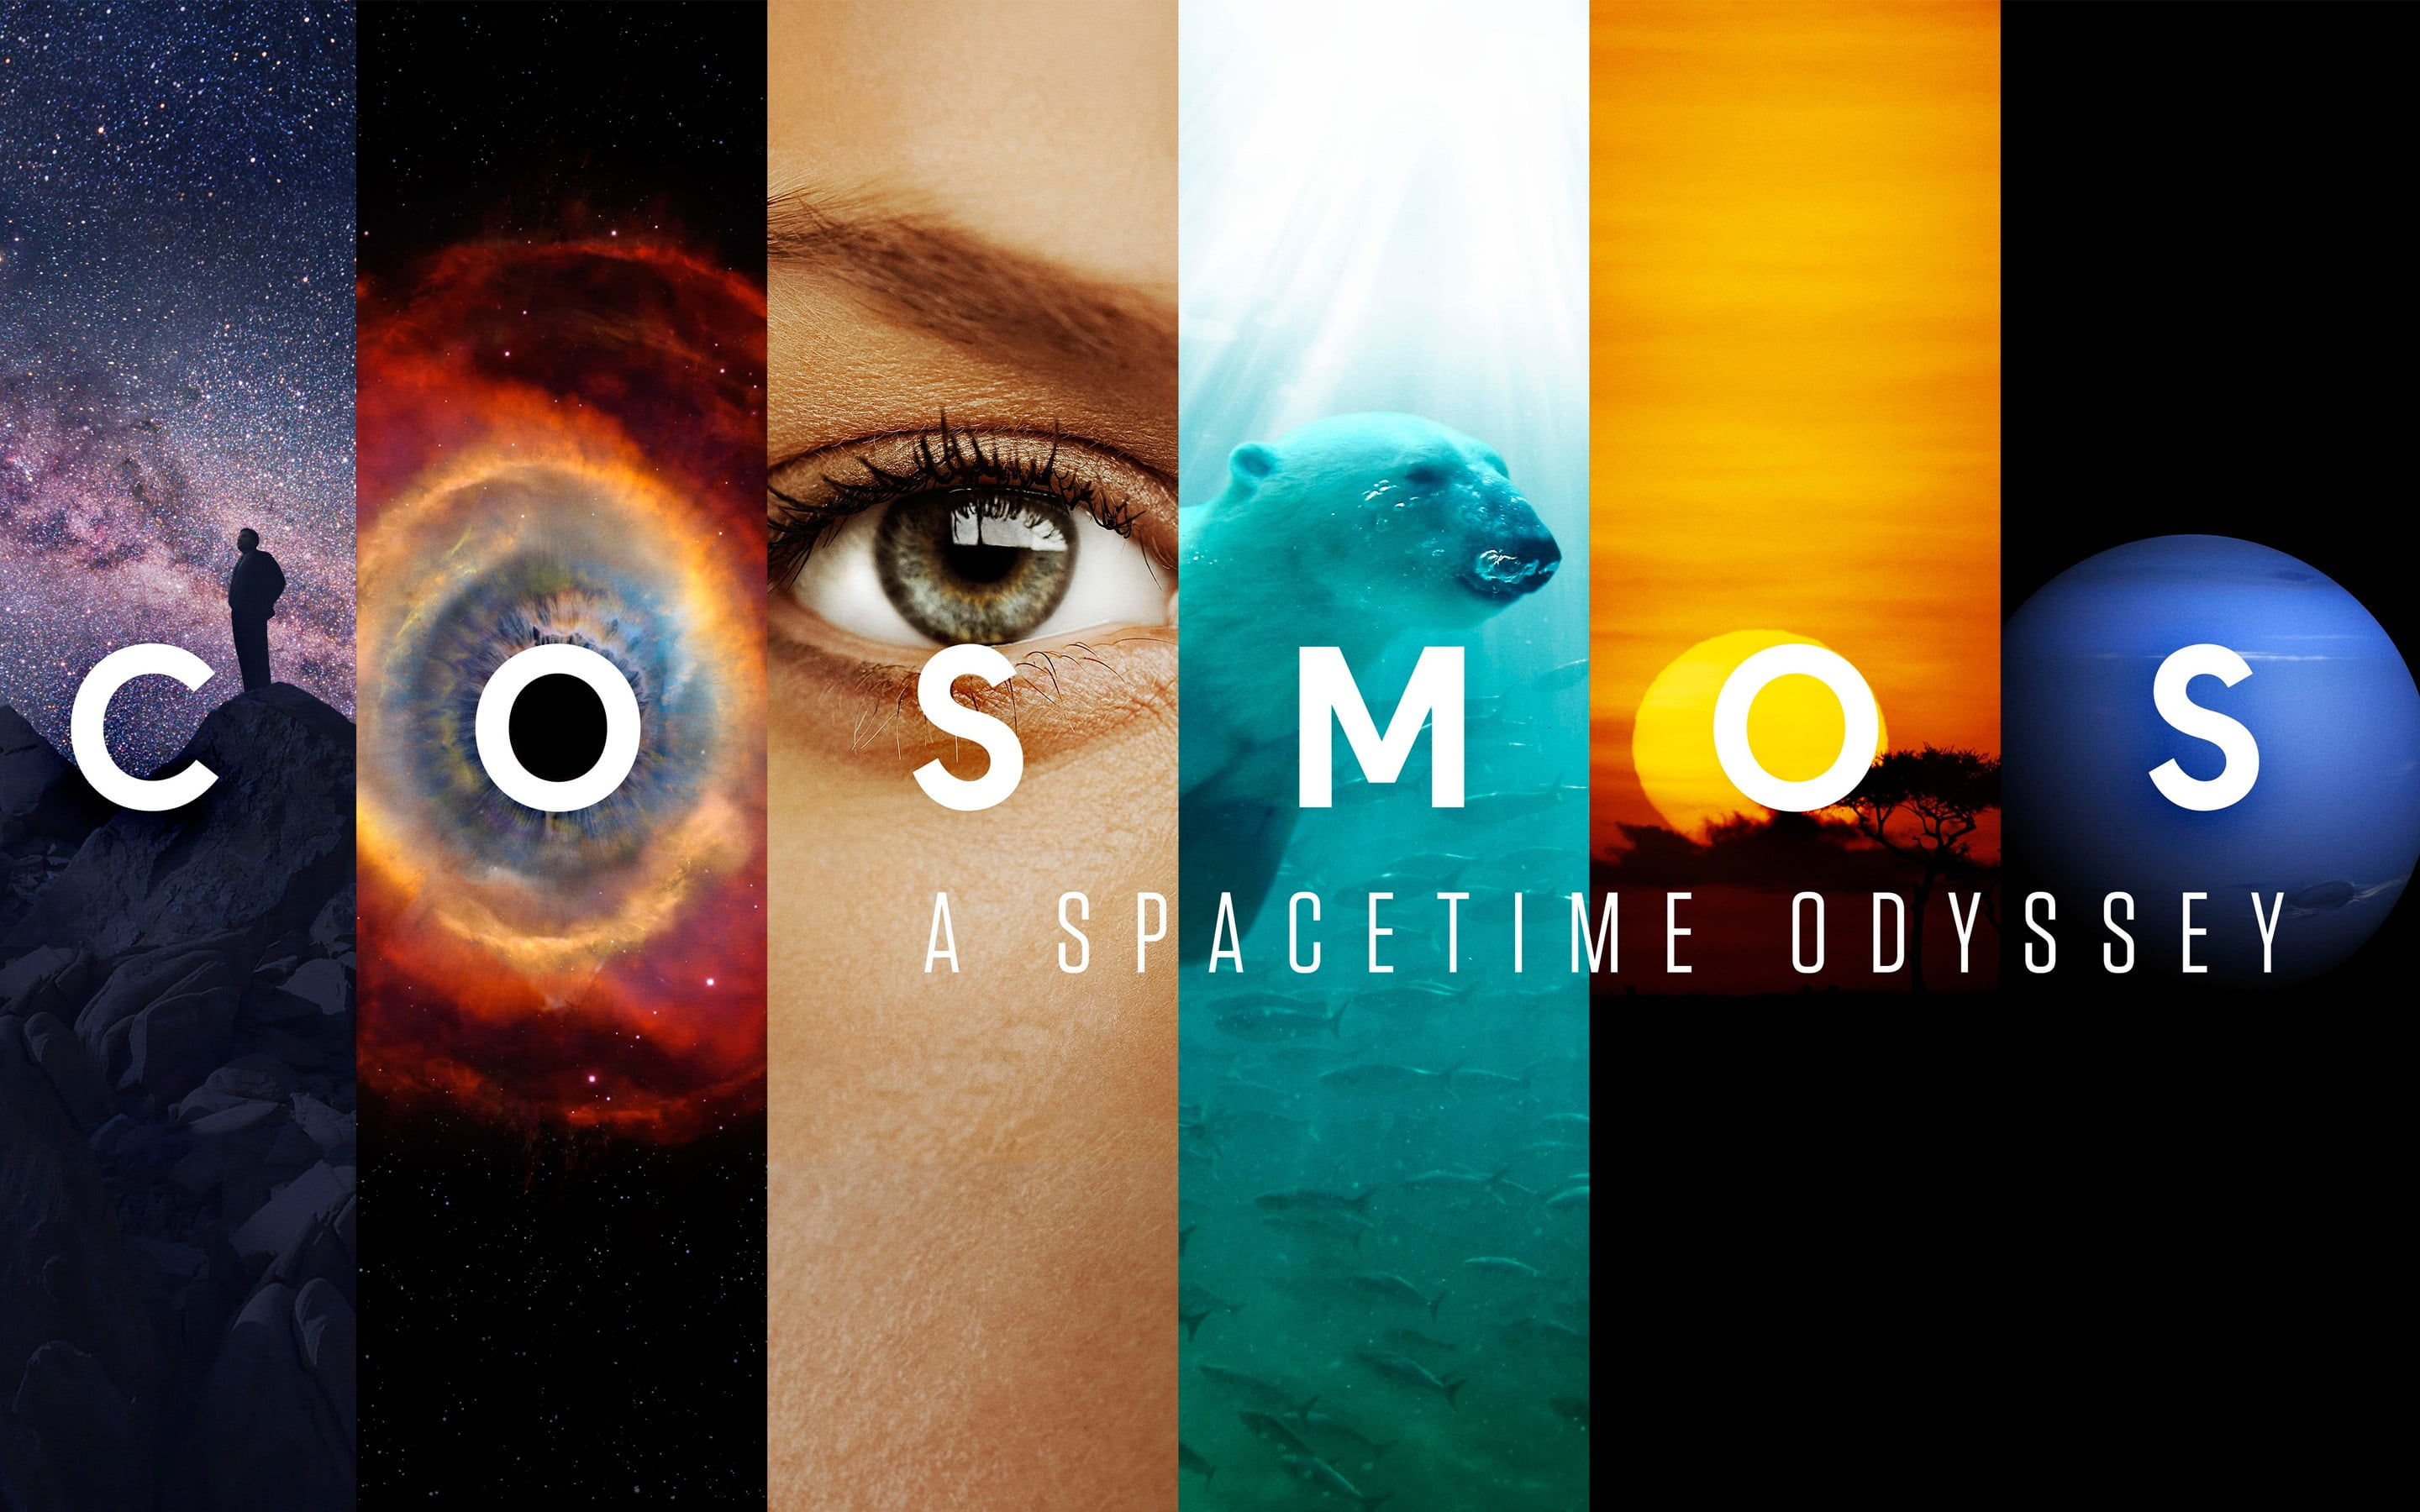 Cosmos A Spacetime Odyssey digital wallpaper, universe, space, Neil deGrasse Tyson, Carl Sagan